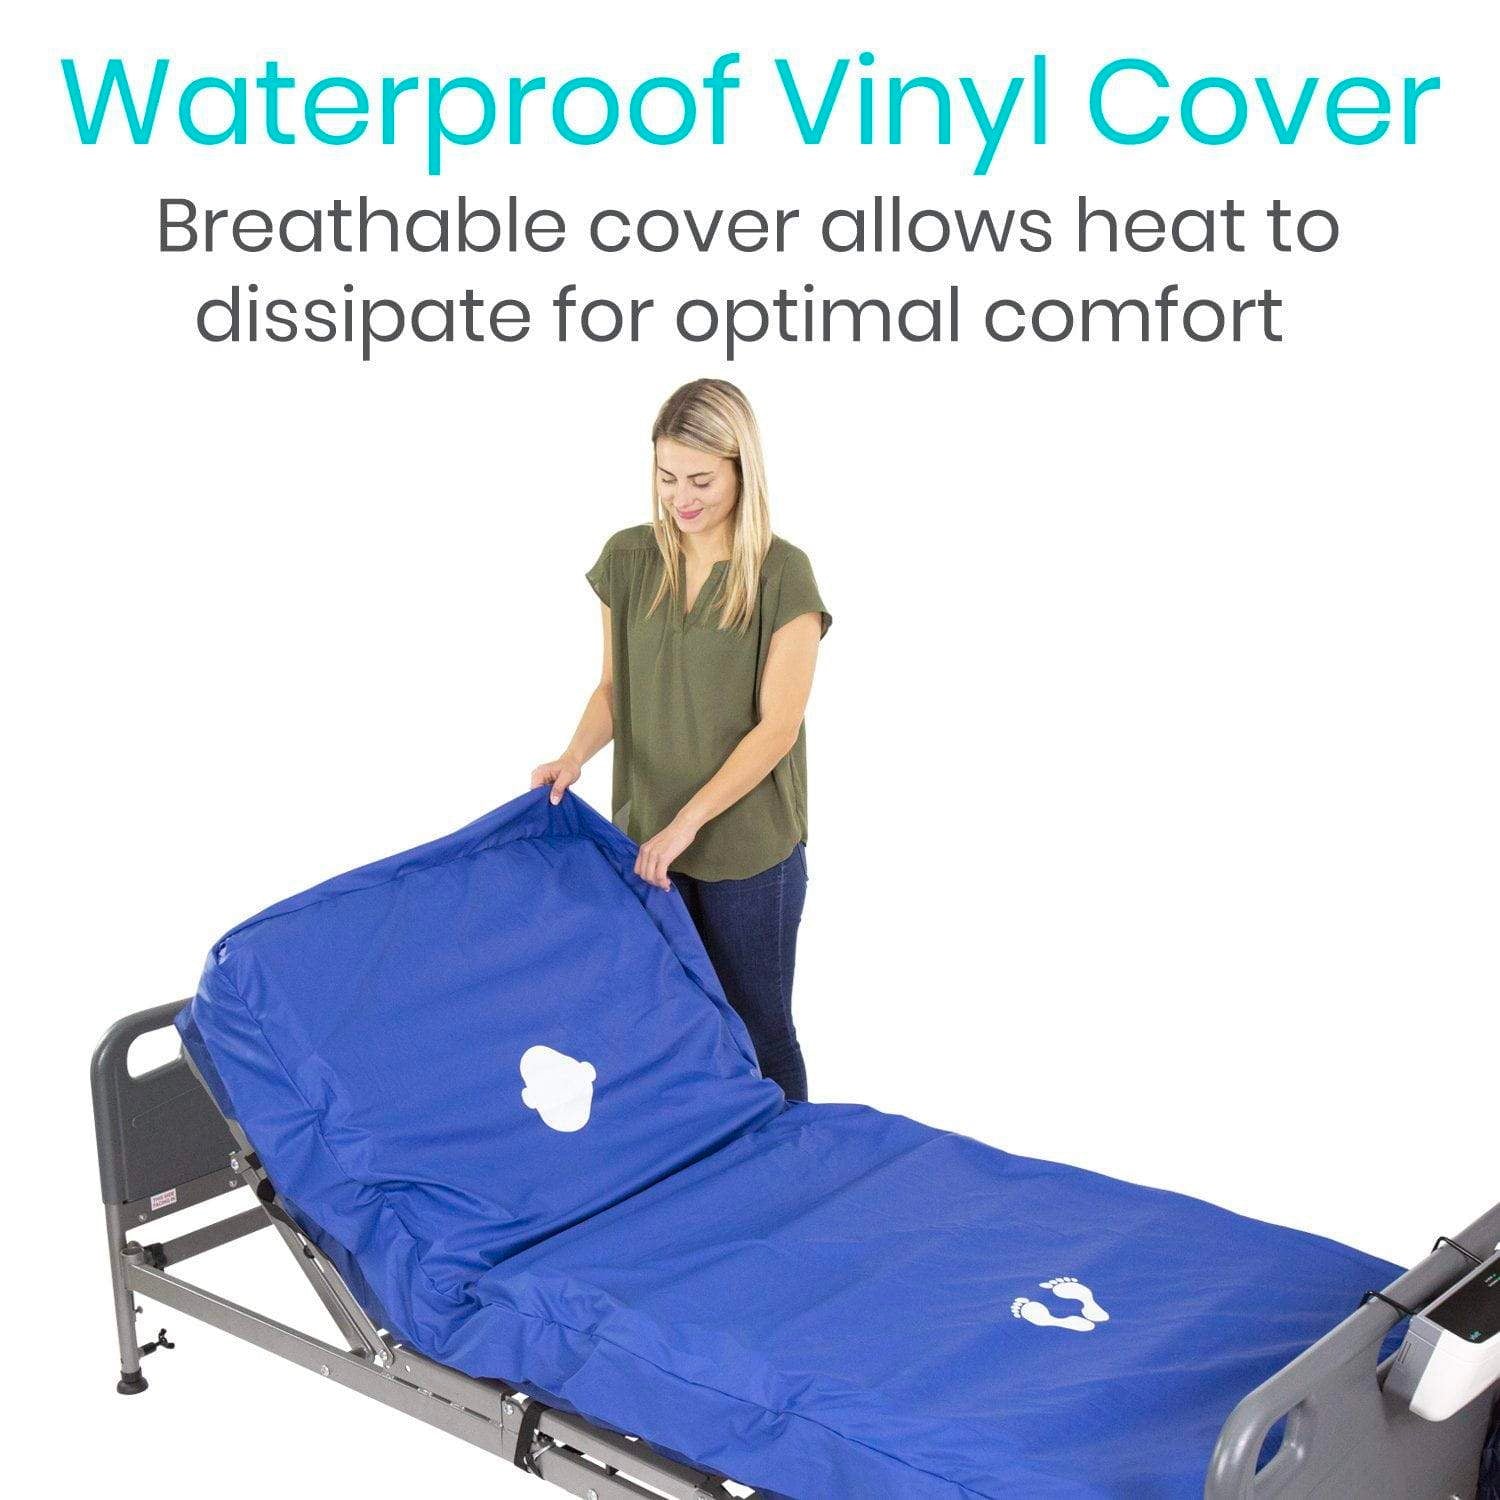 Alternate pressure low air loss 8" mattress waterproof vinyl cover